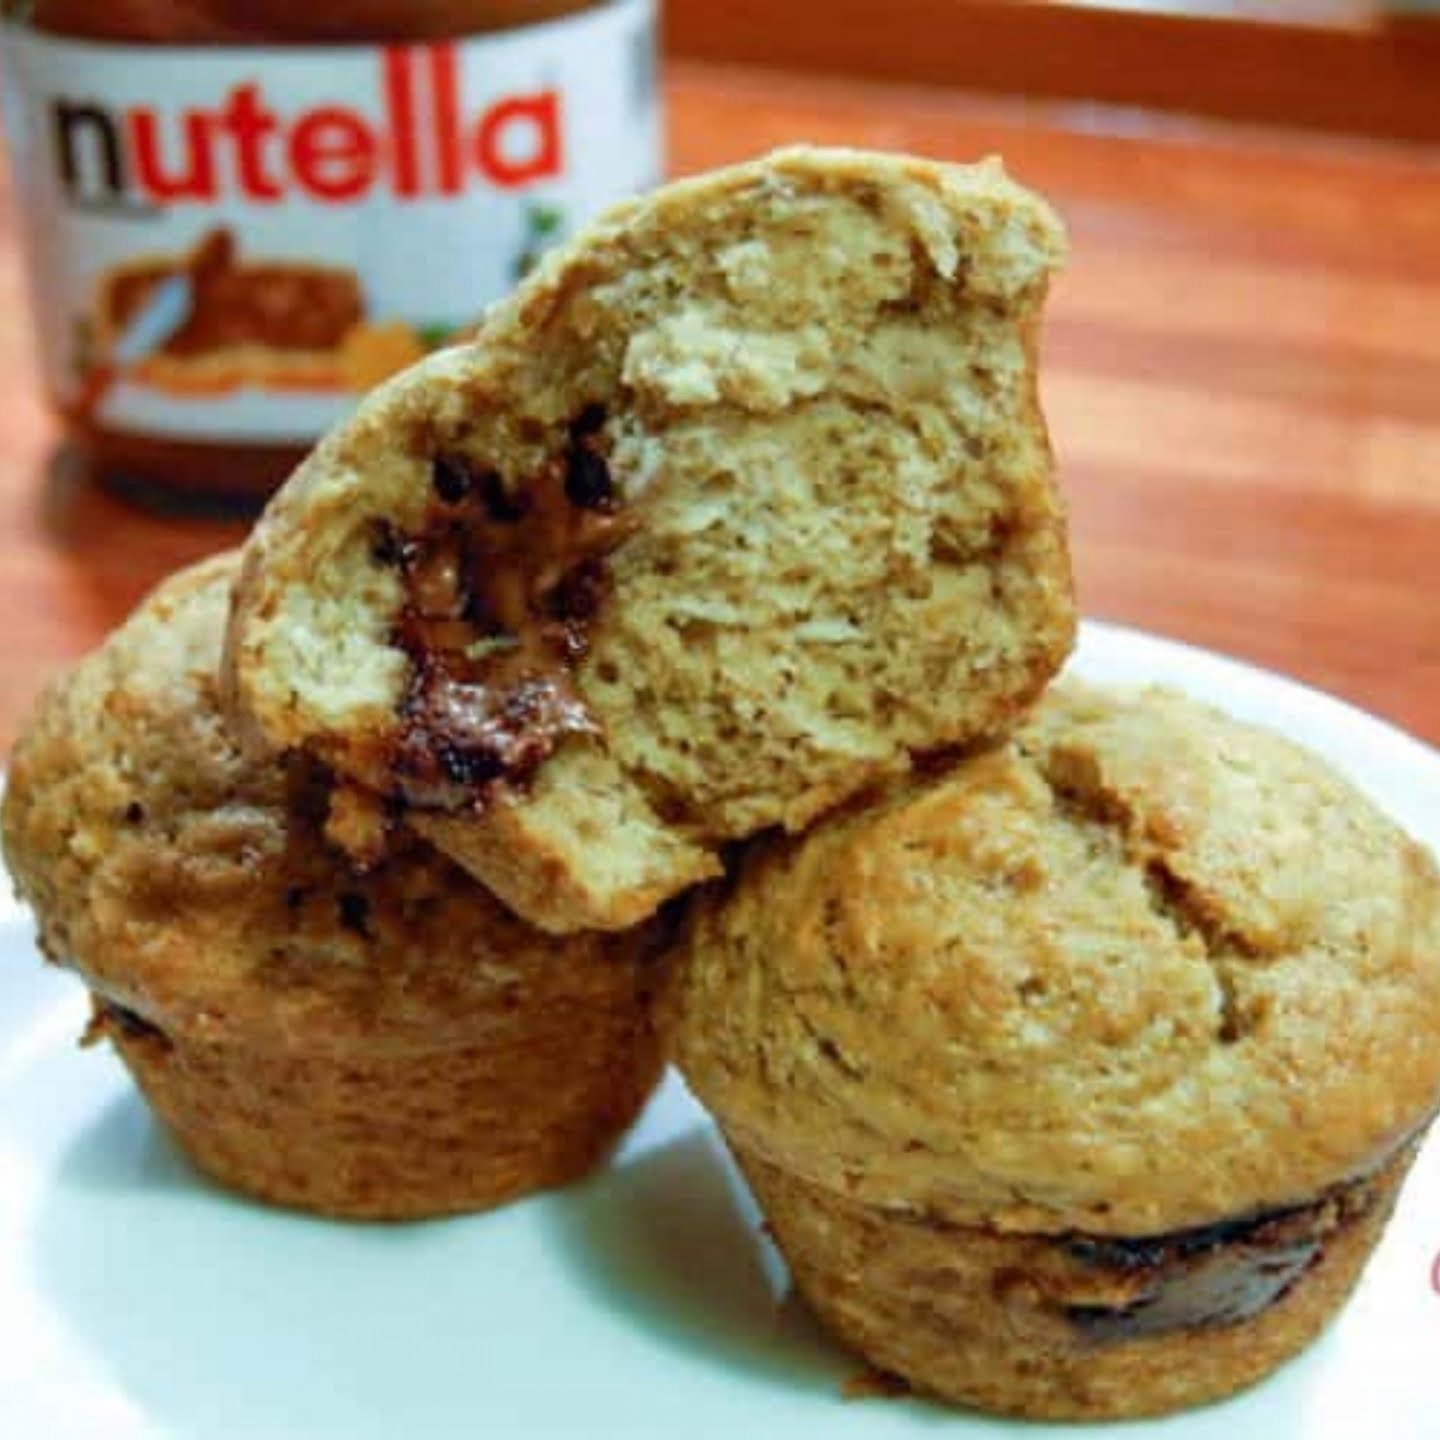 Nutella banana muffins